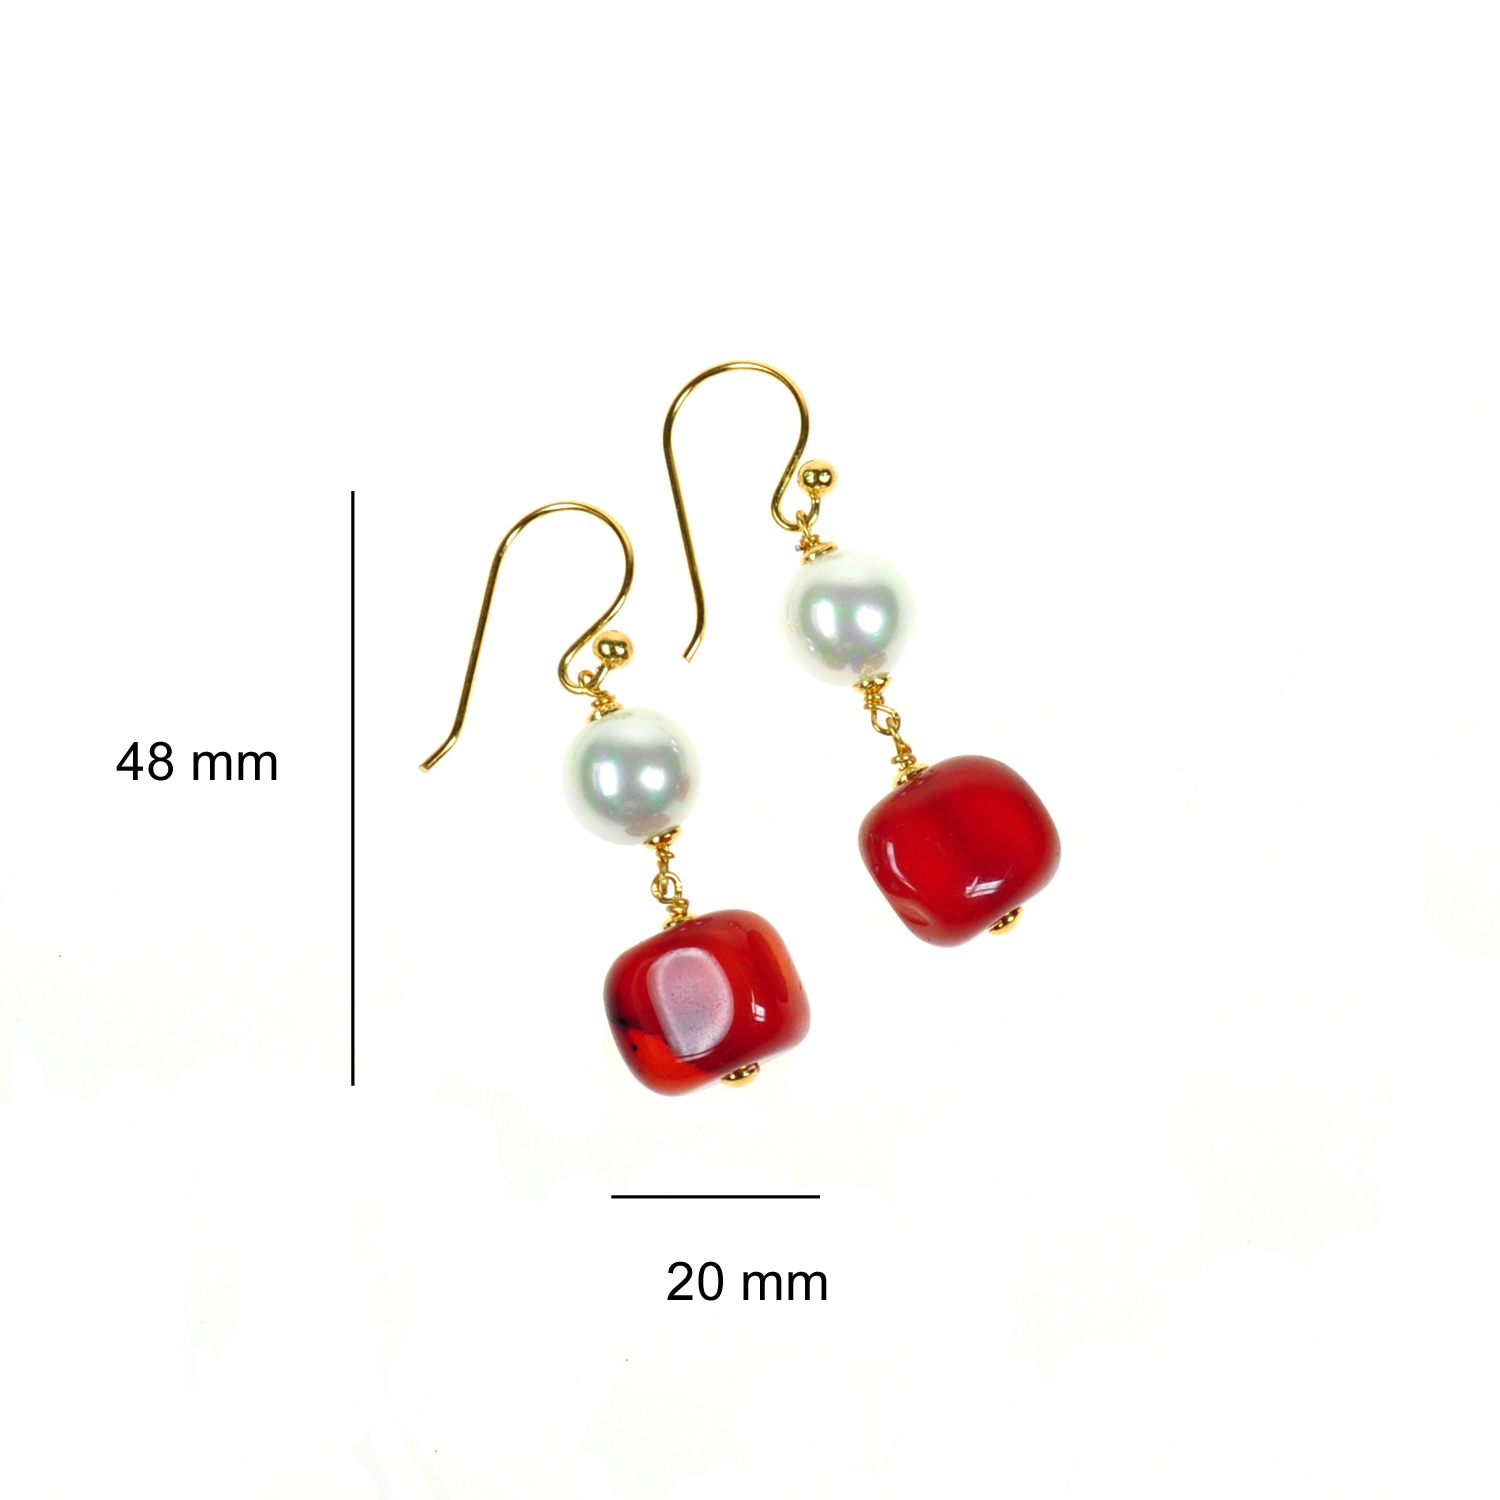 Pearls earrings with carnelian stones 3